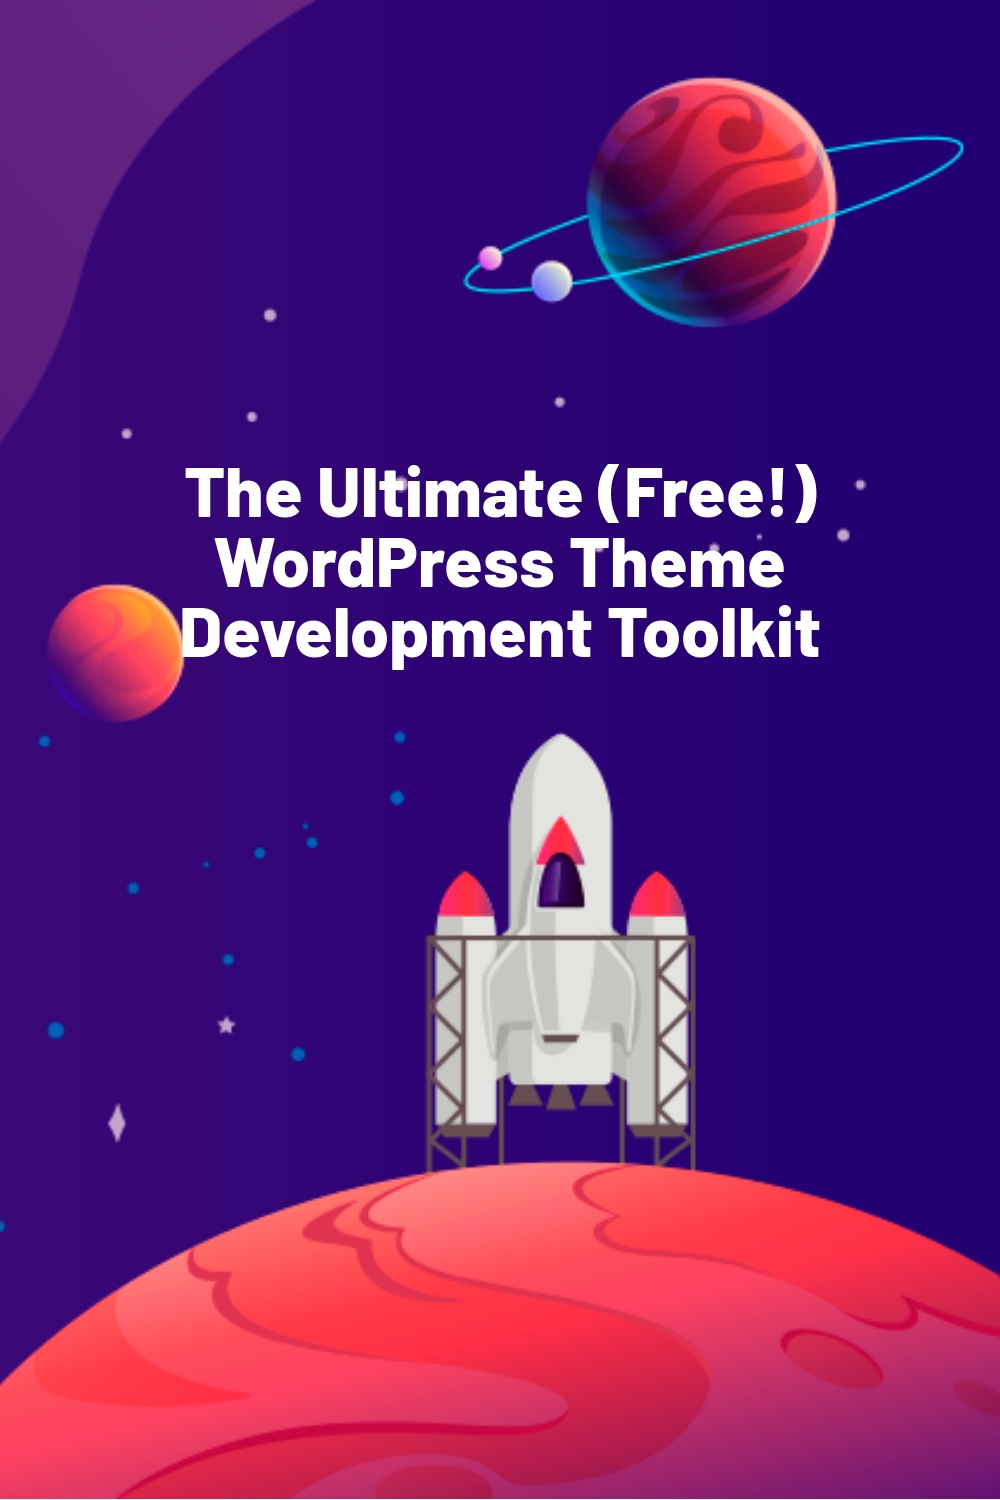 The Ultimate (Free!) WordPress Theme Development Toolkit